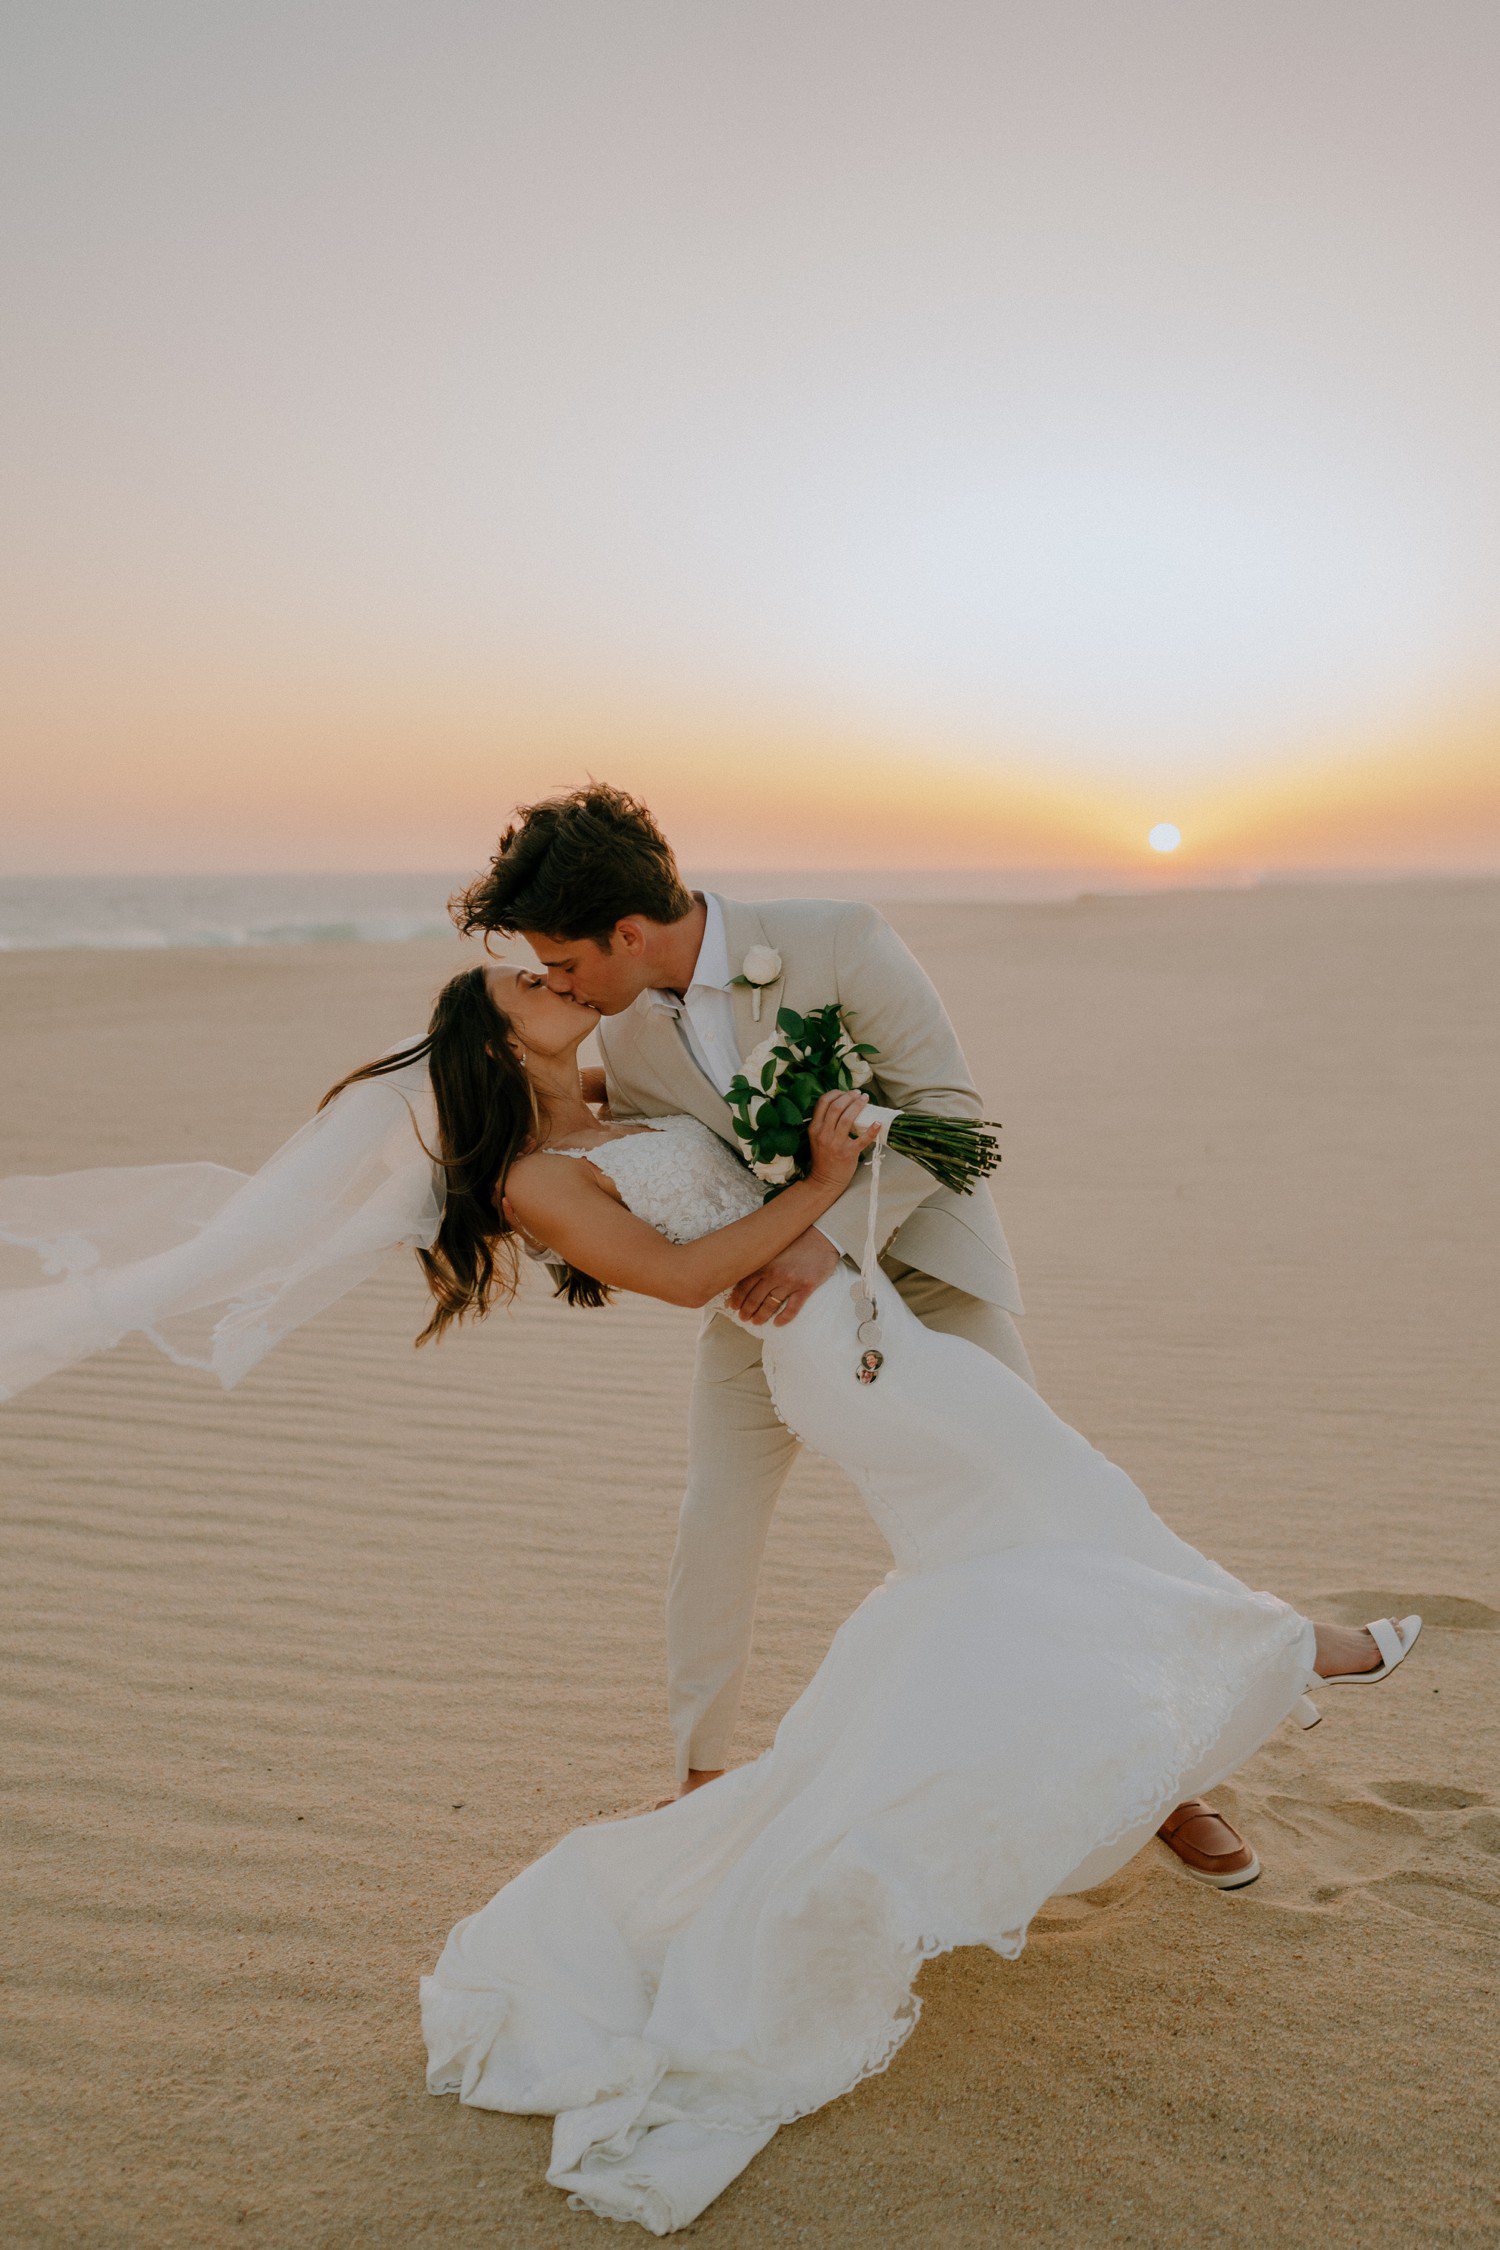 Los Cabos beach wedding photos during sunset.